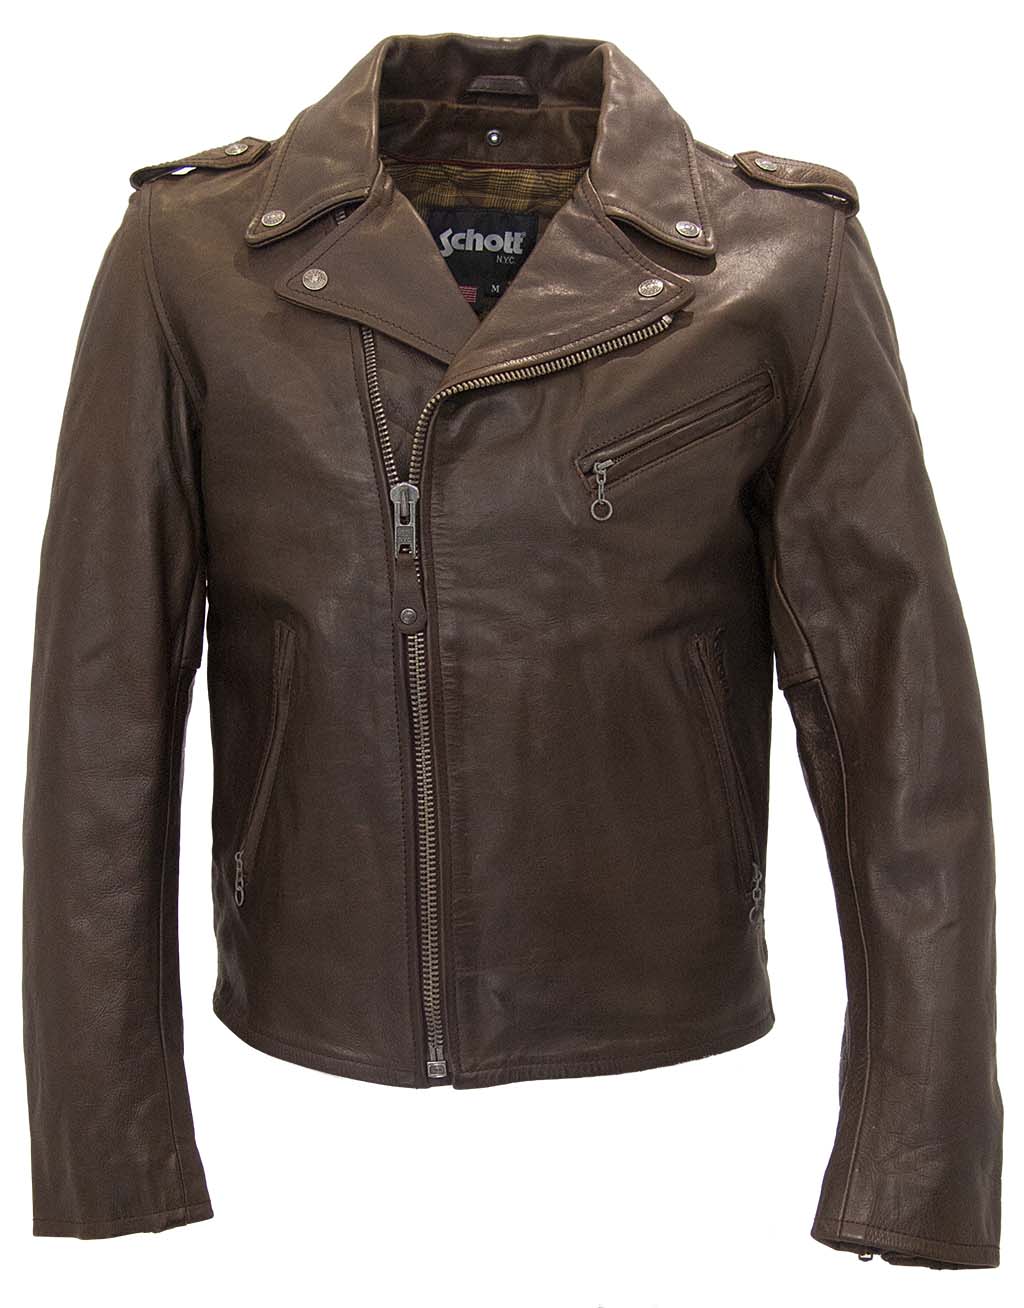 Schott Perfecto LC 1140 Mens Brown Leather Jacket BNWT by Schott NYC | eBay